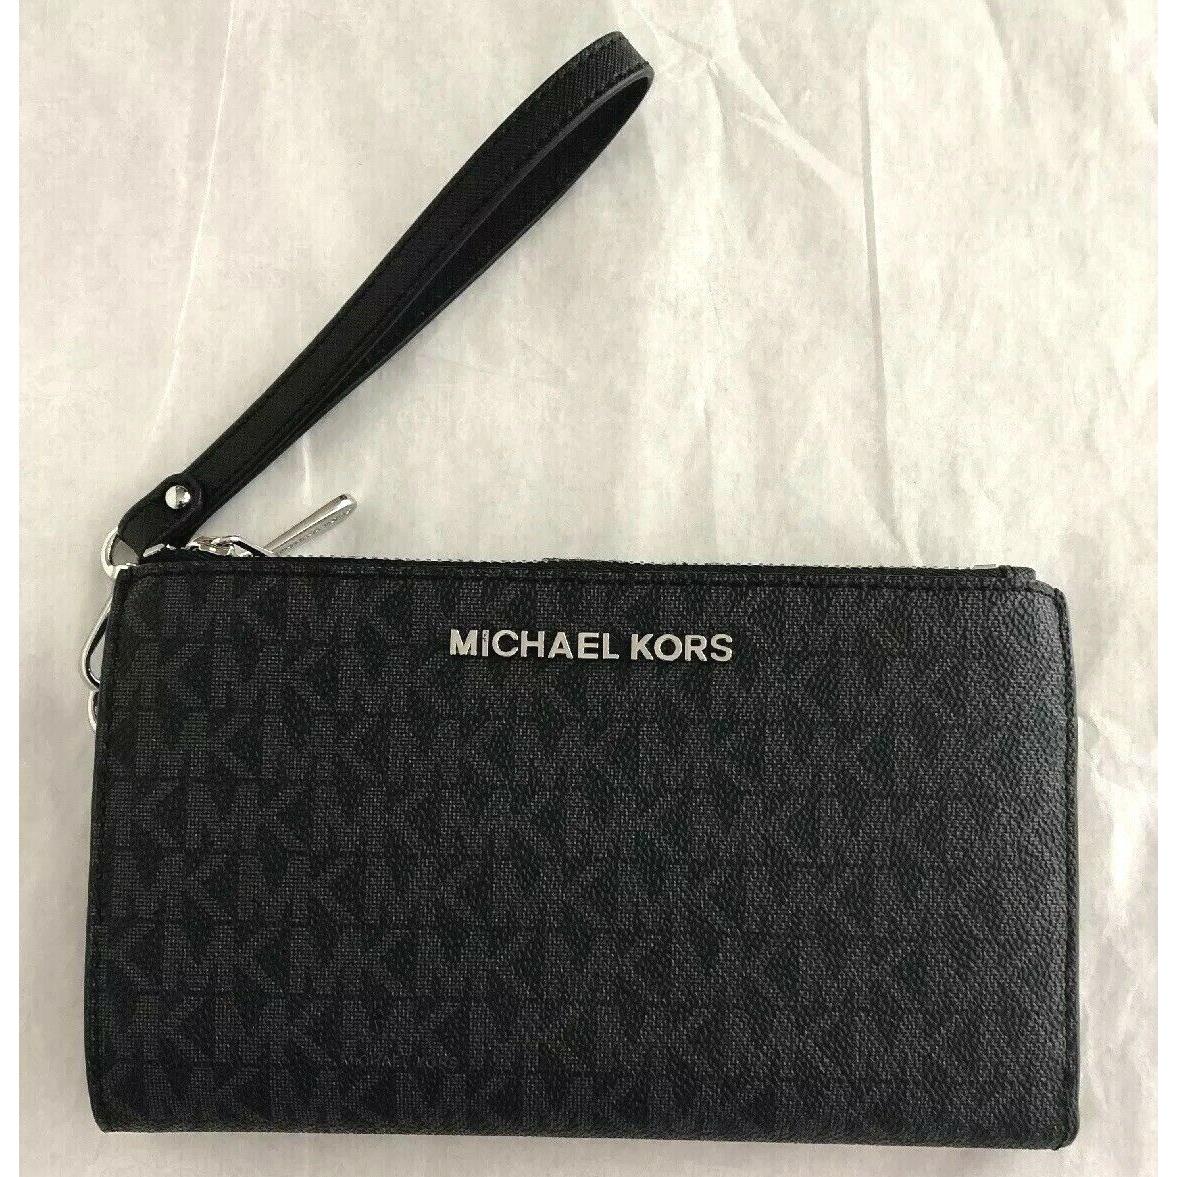 Michael Kors wallet Jet Set Travel - Black